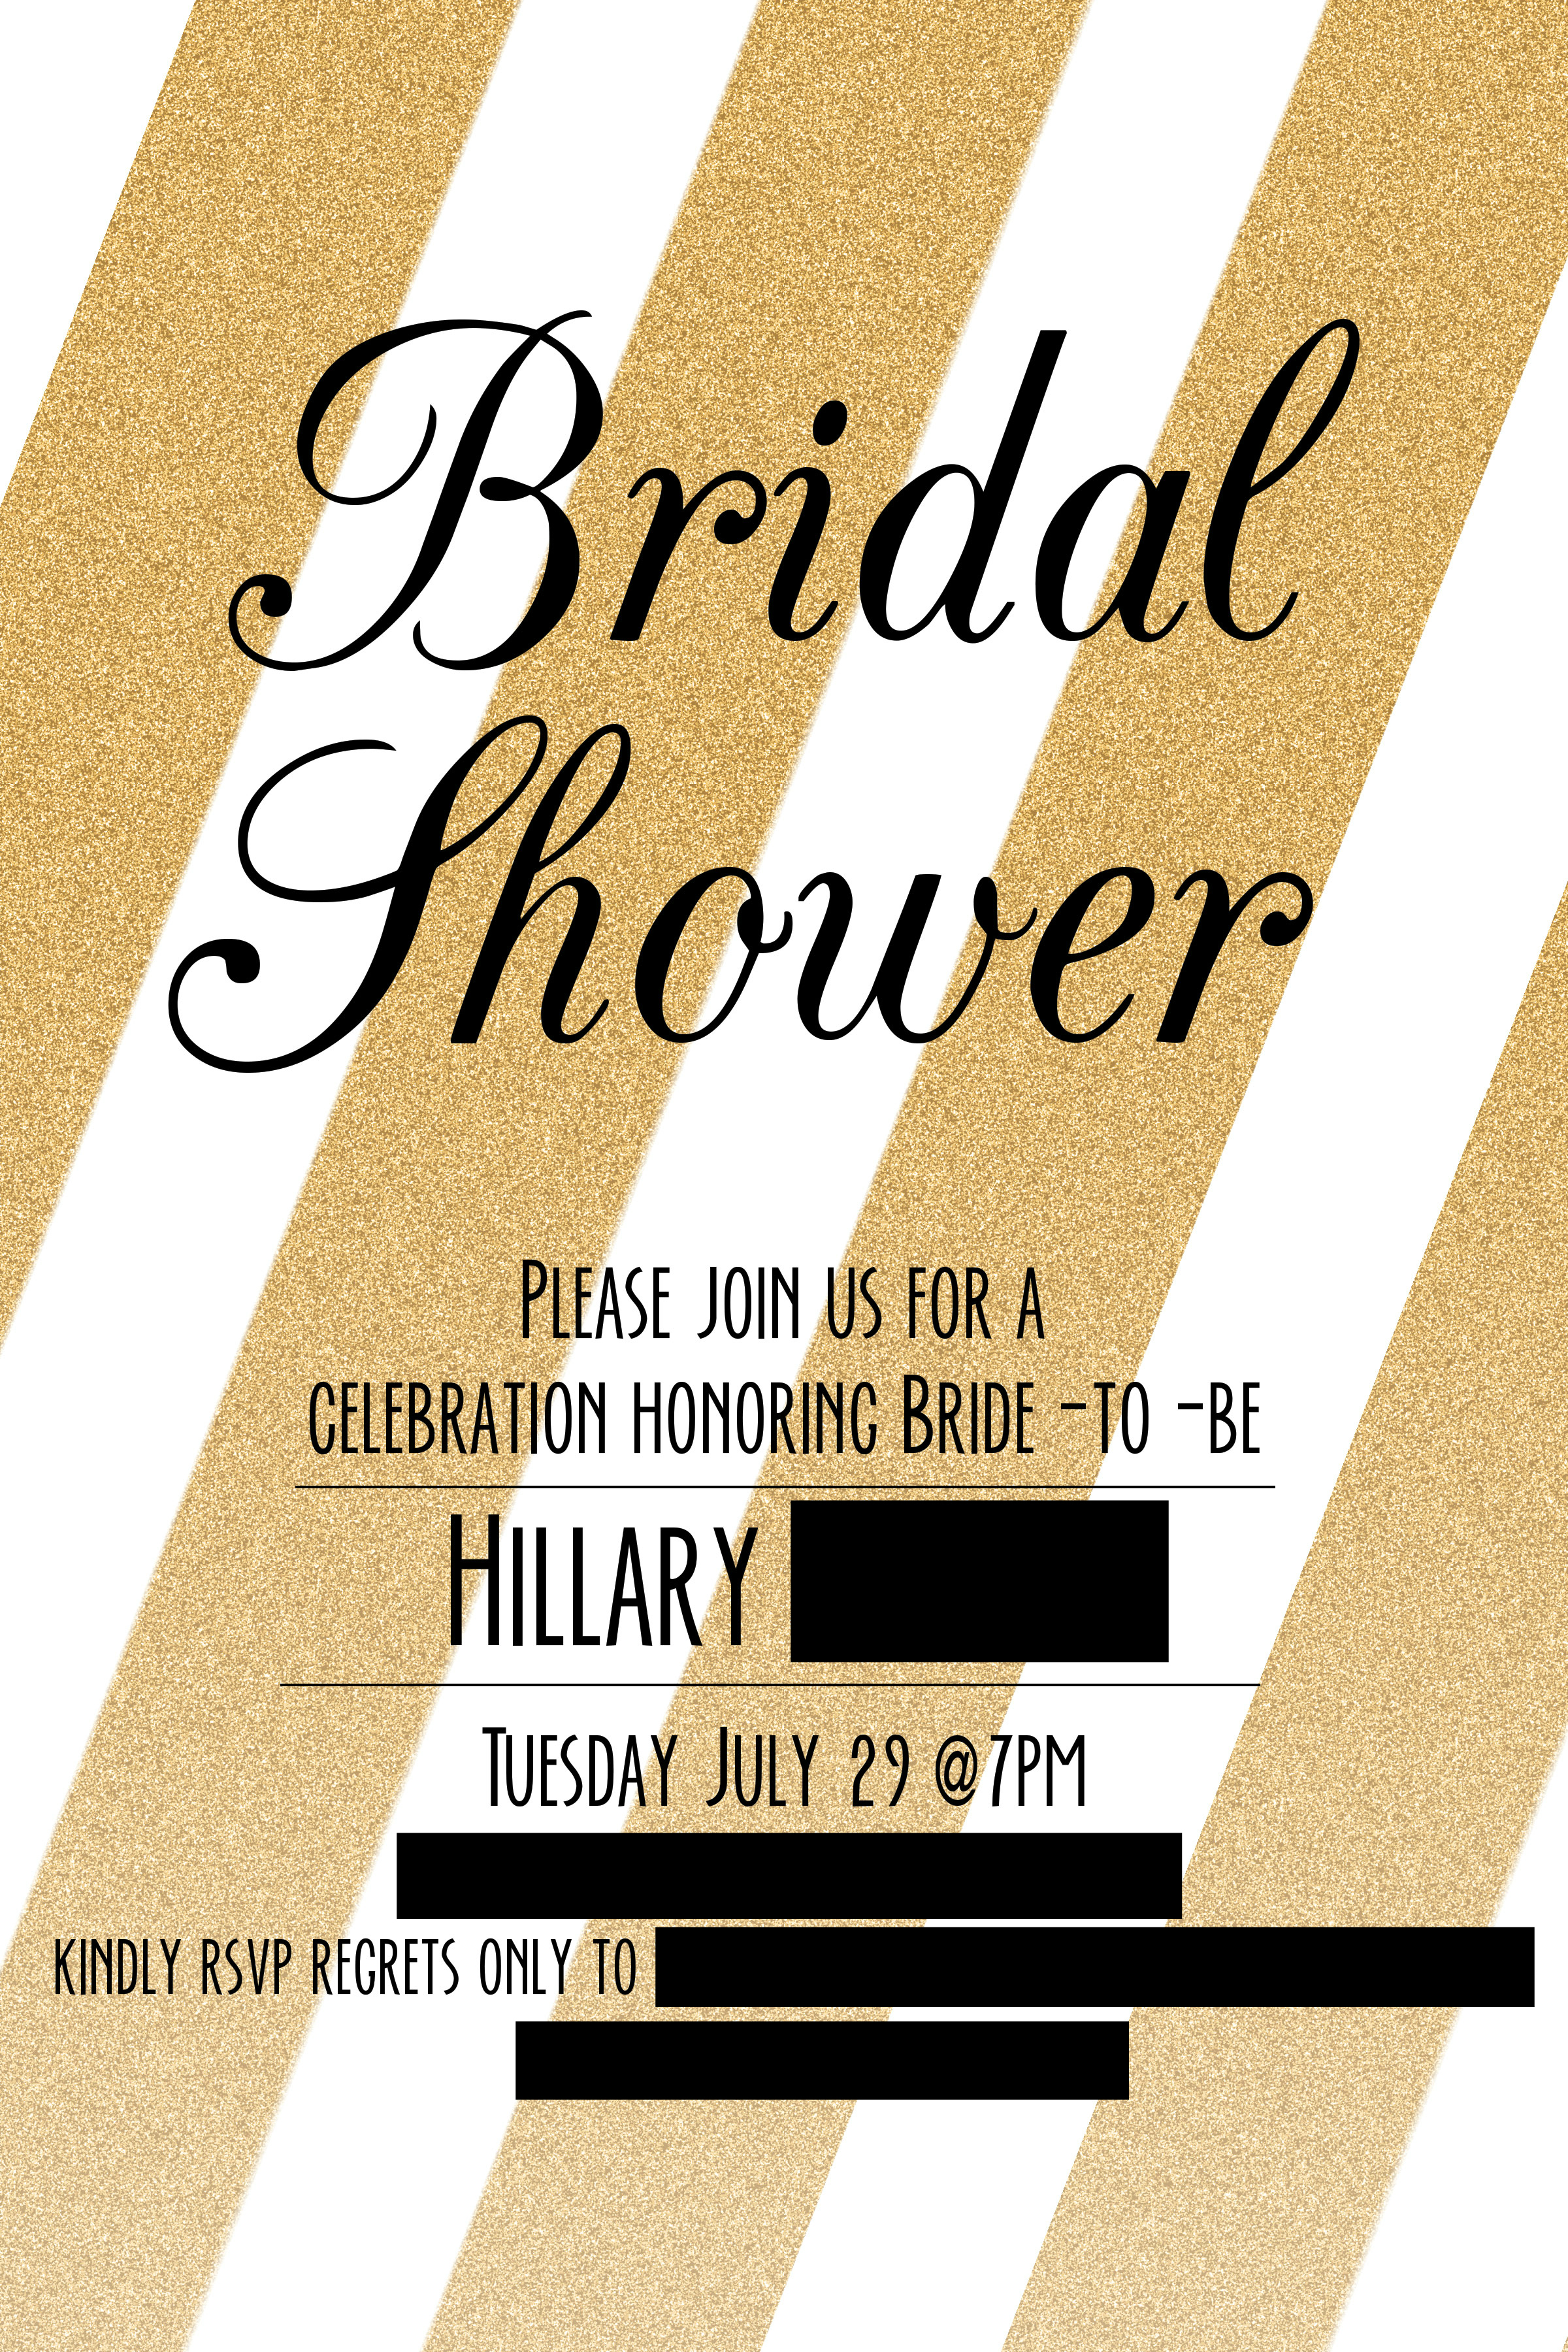 Hillary's-bridal-shower-invitation edit